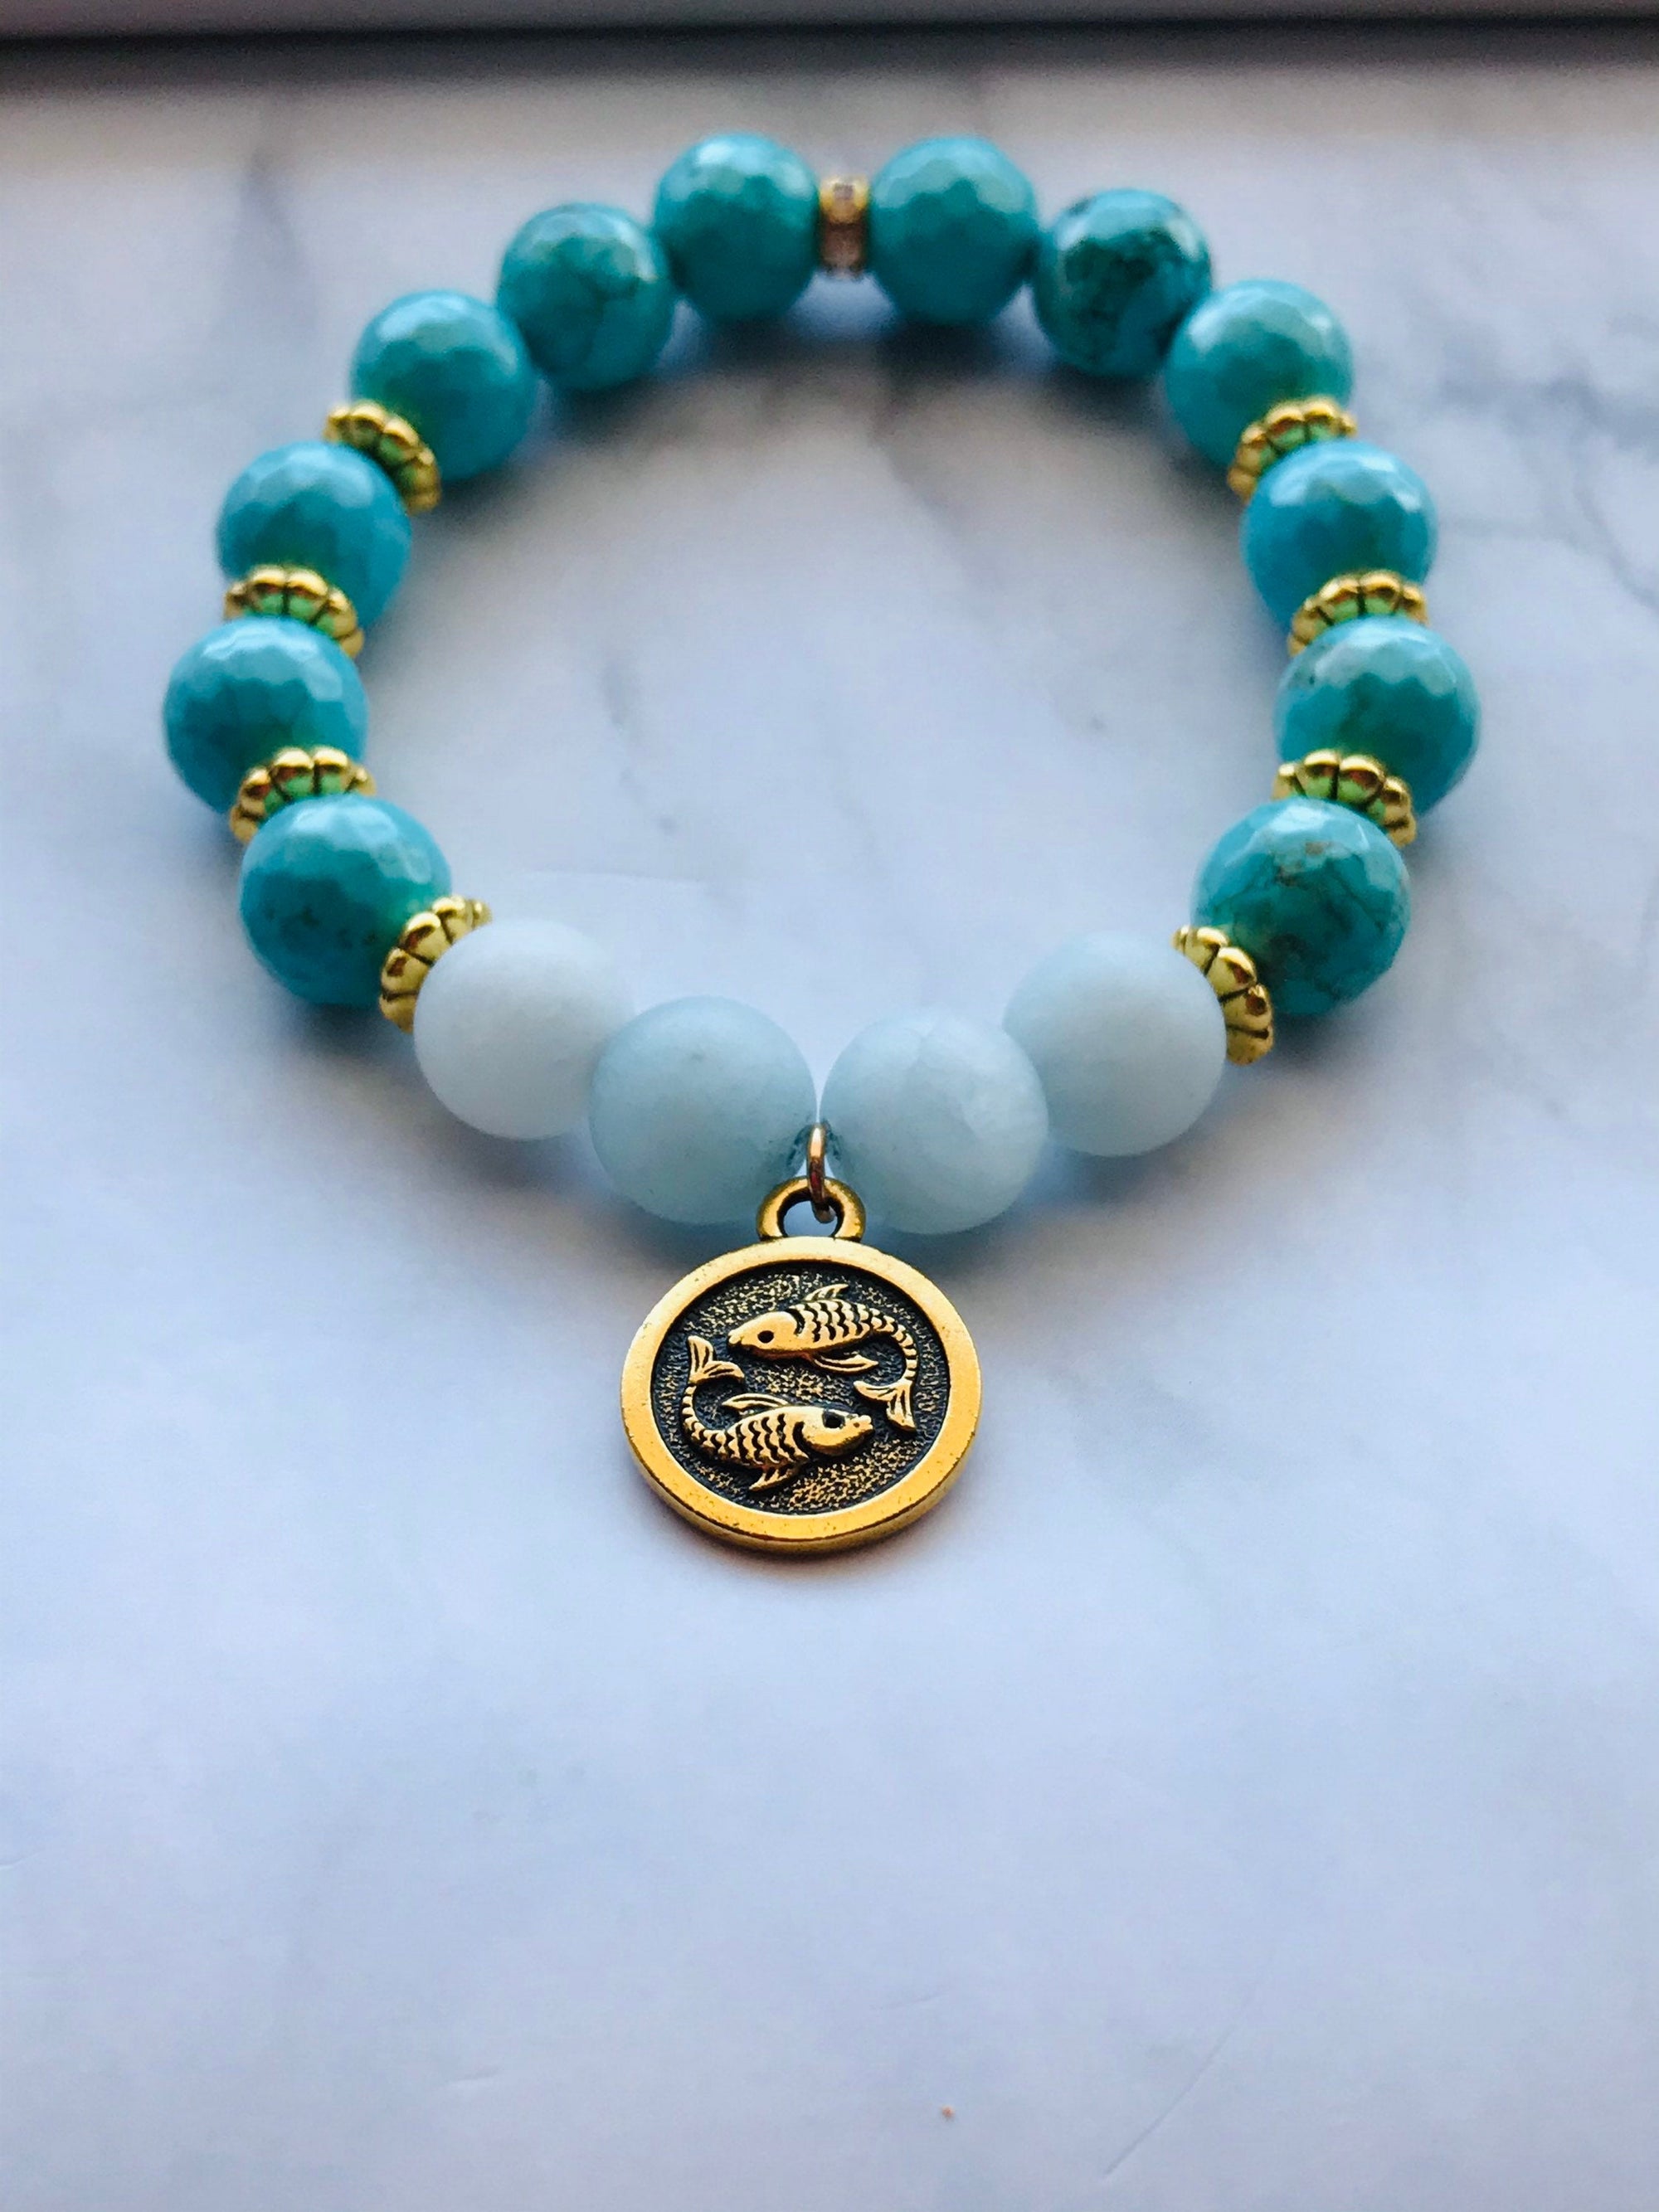 Turquoise and Aquamarine Handmade Gemstone Bracelet, Energy Bracelet, Gemstone Bracelet, Beaded Bracelet with Pisces Charm